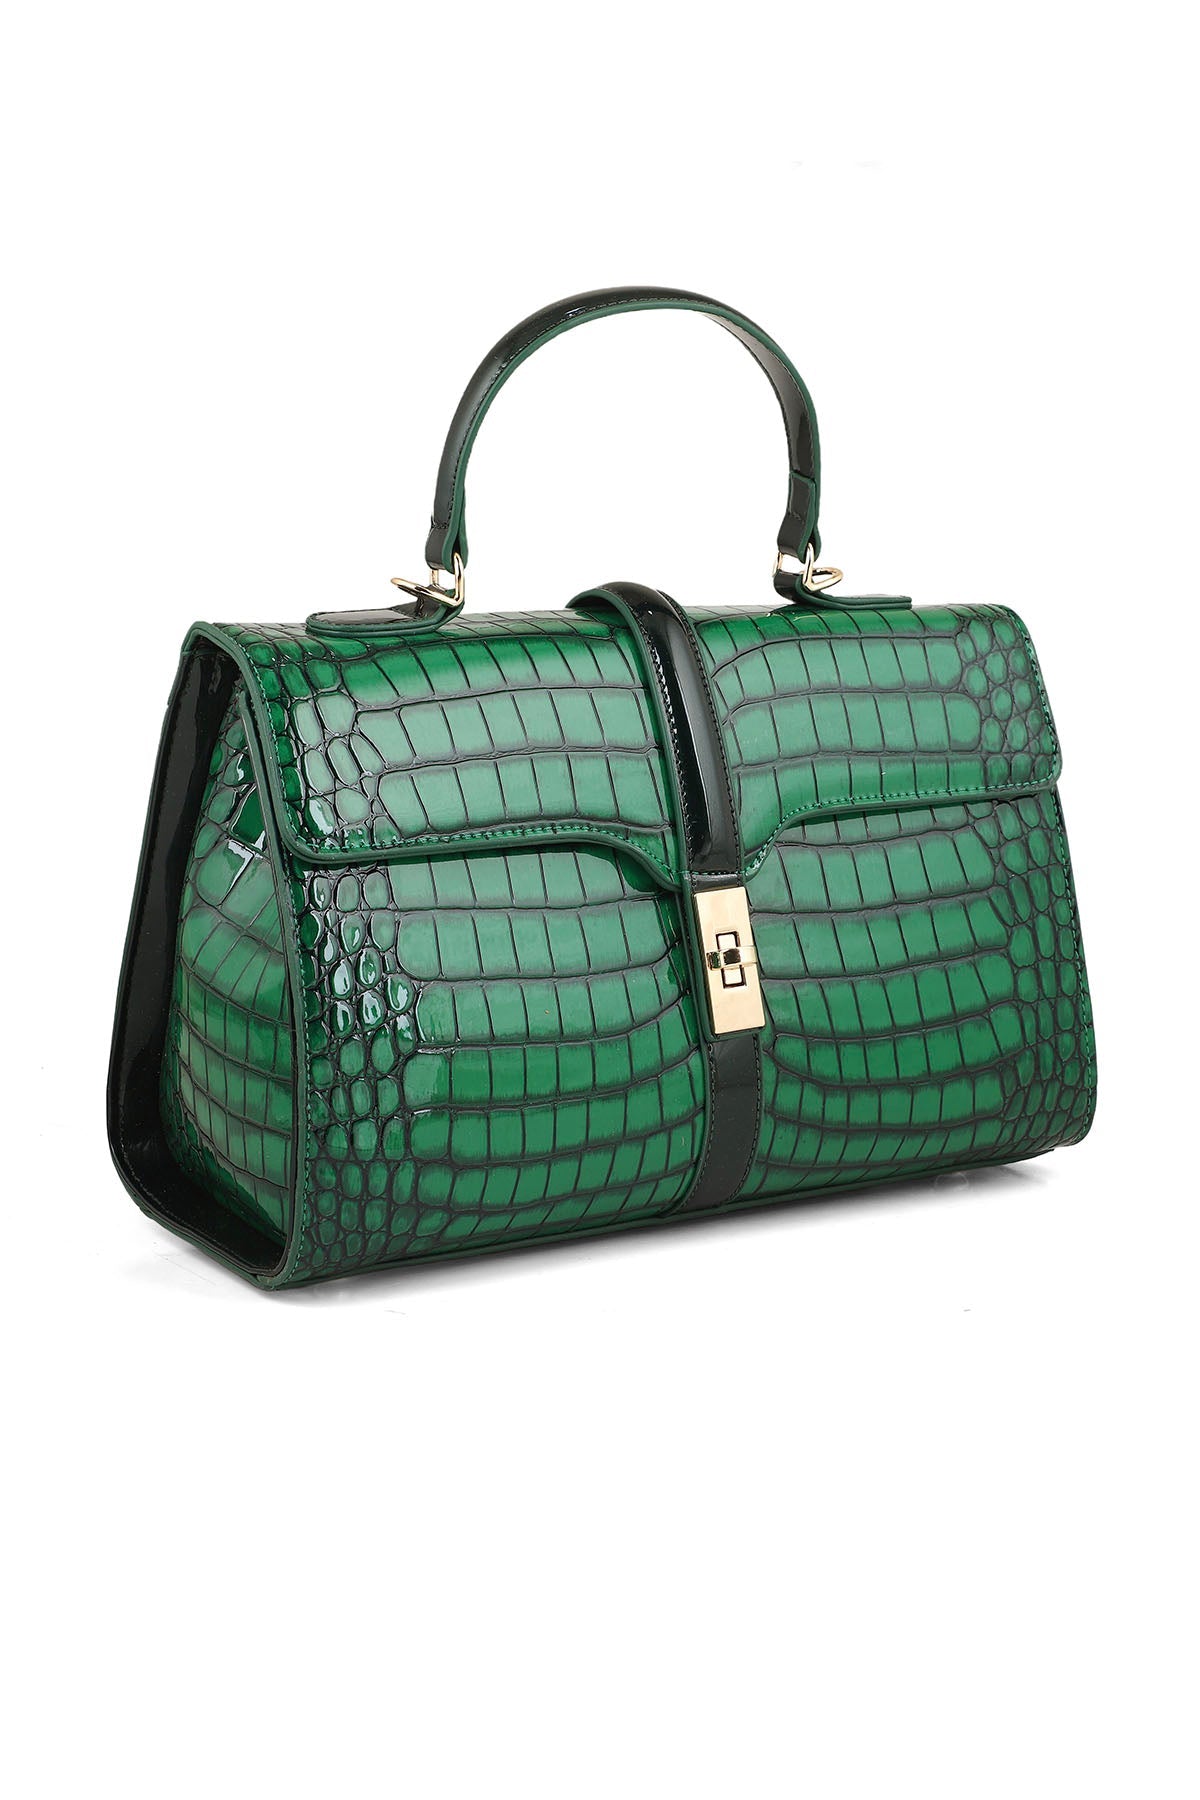 Top Handle Hand Bags B15099-Green